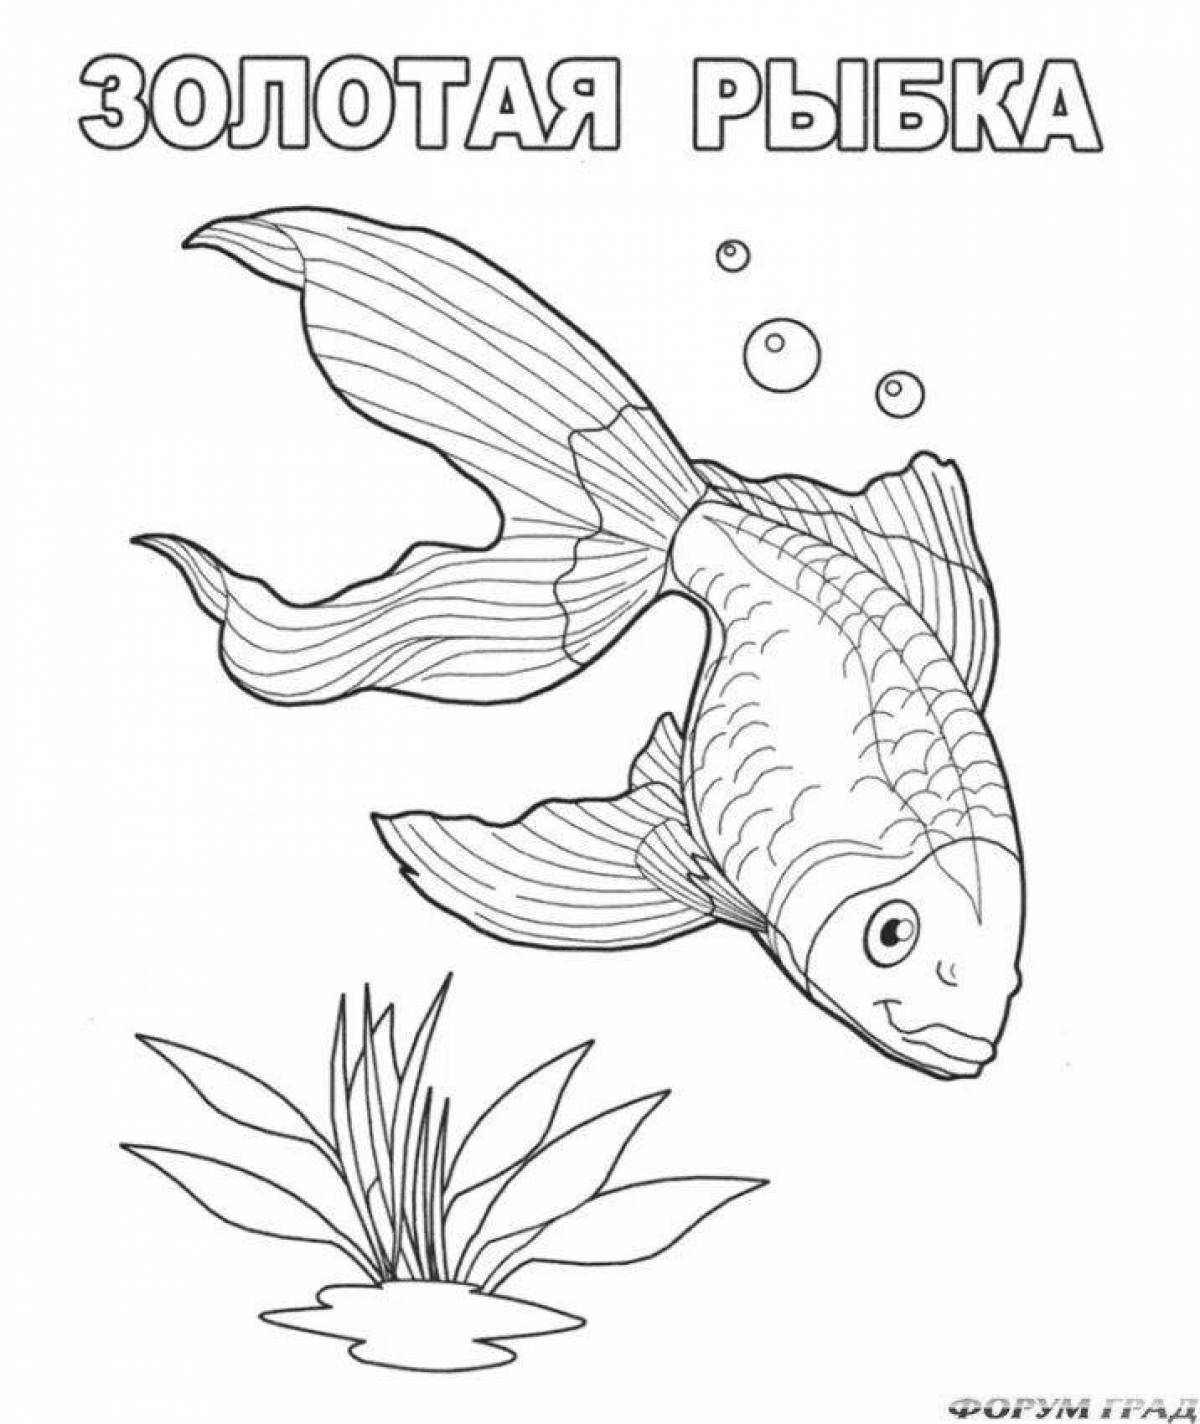 Adorable aquarium fish coloring page